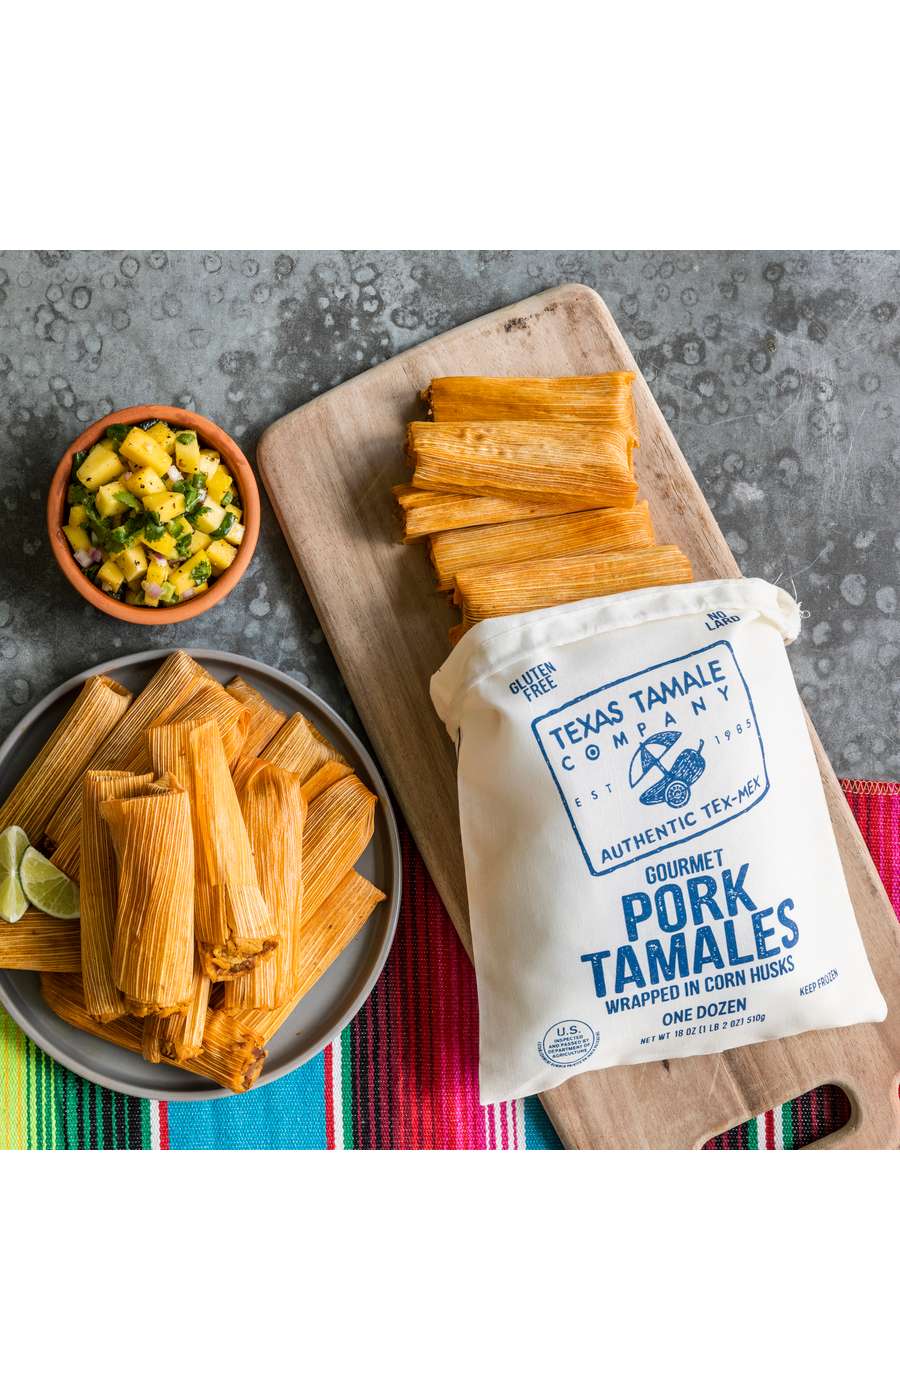 Texas Tamale Company Gourmet Pork Tamales; image 2 of 3